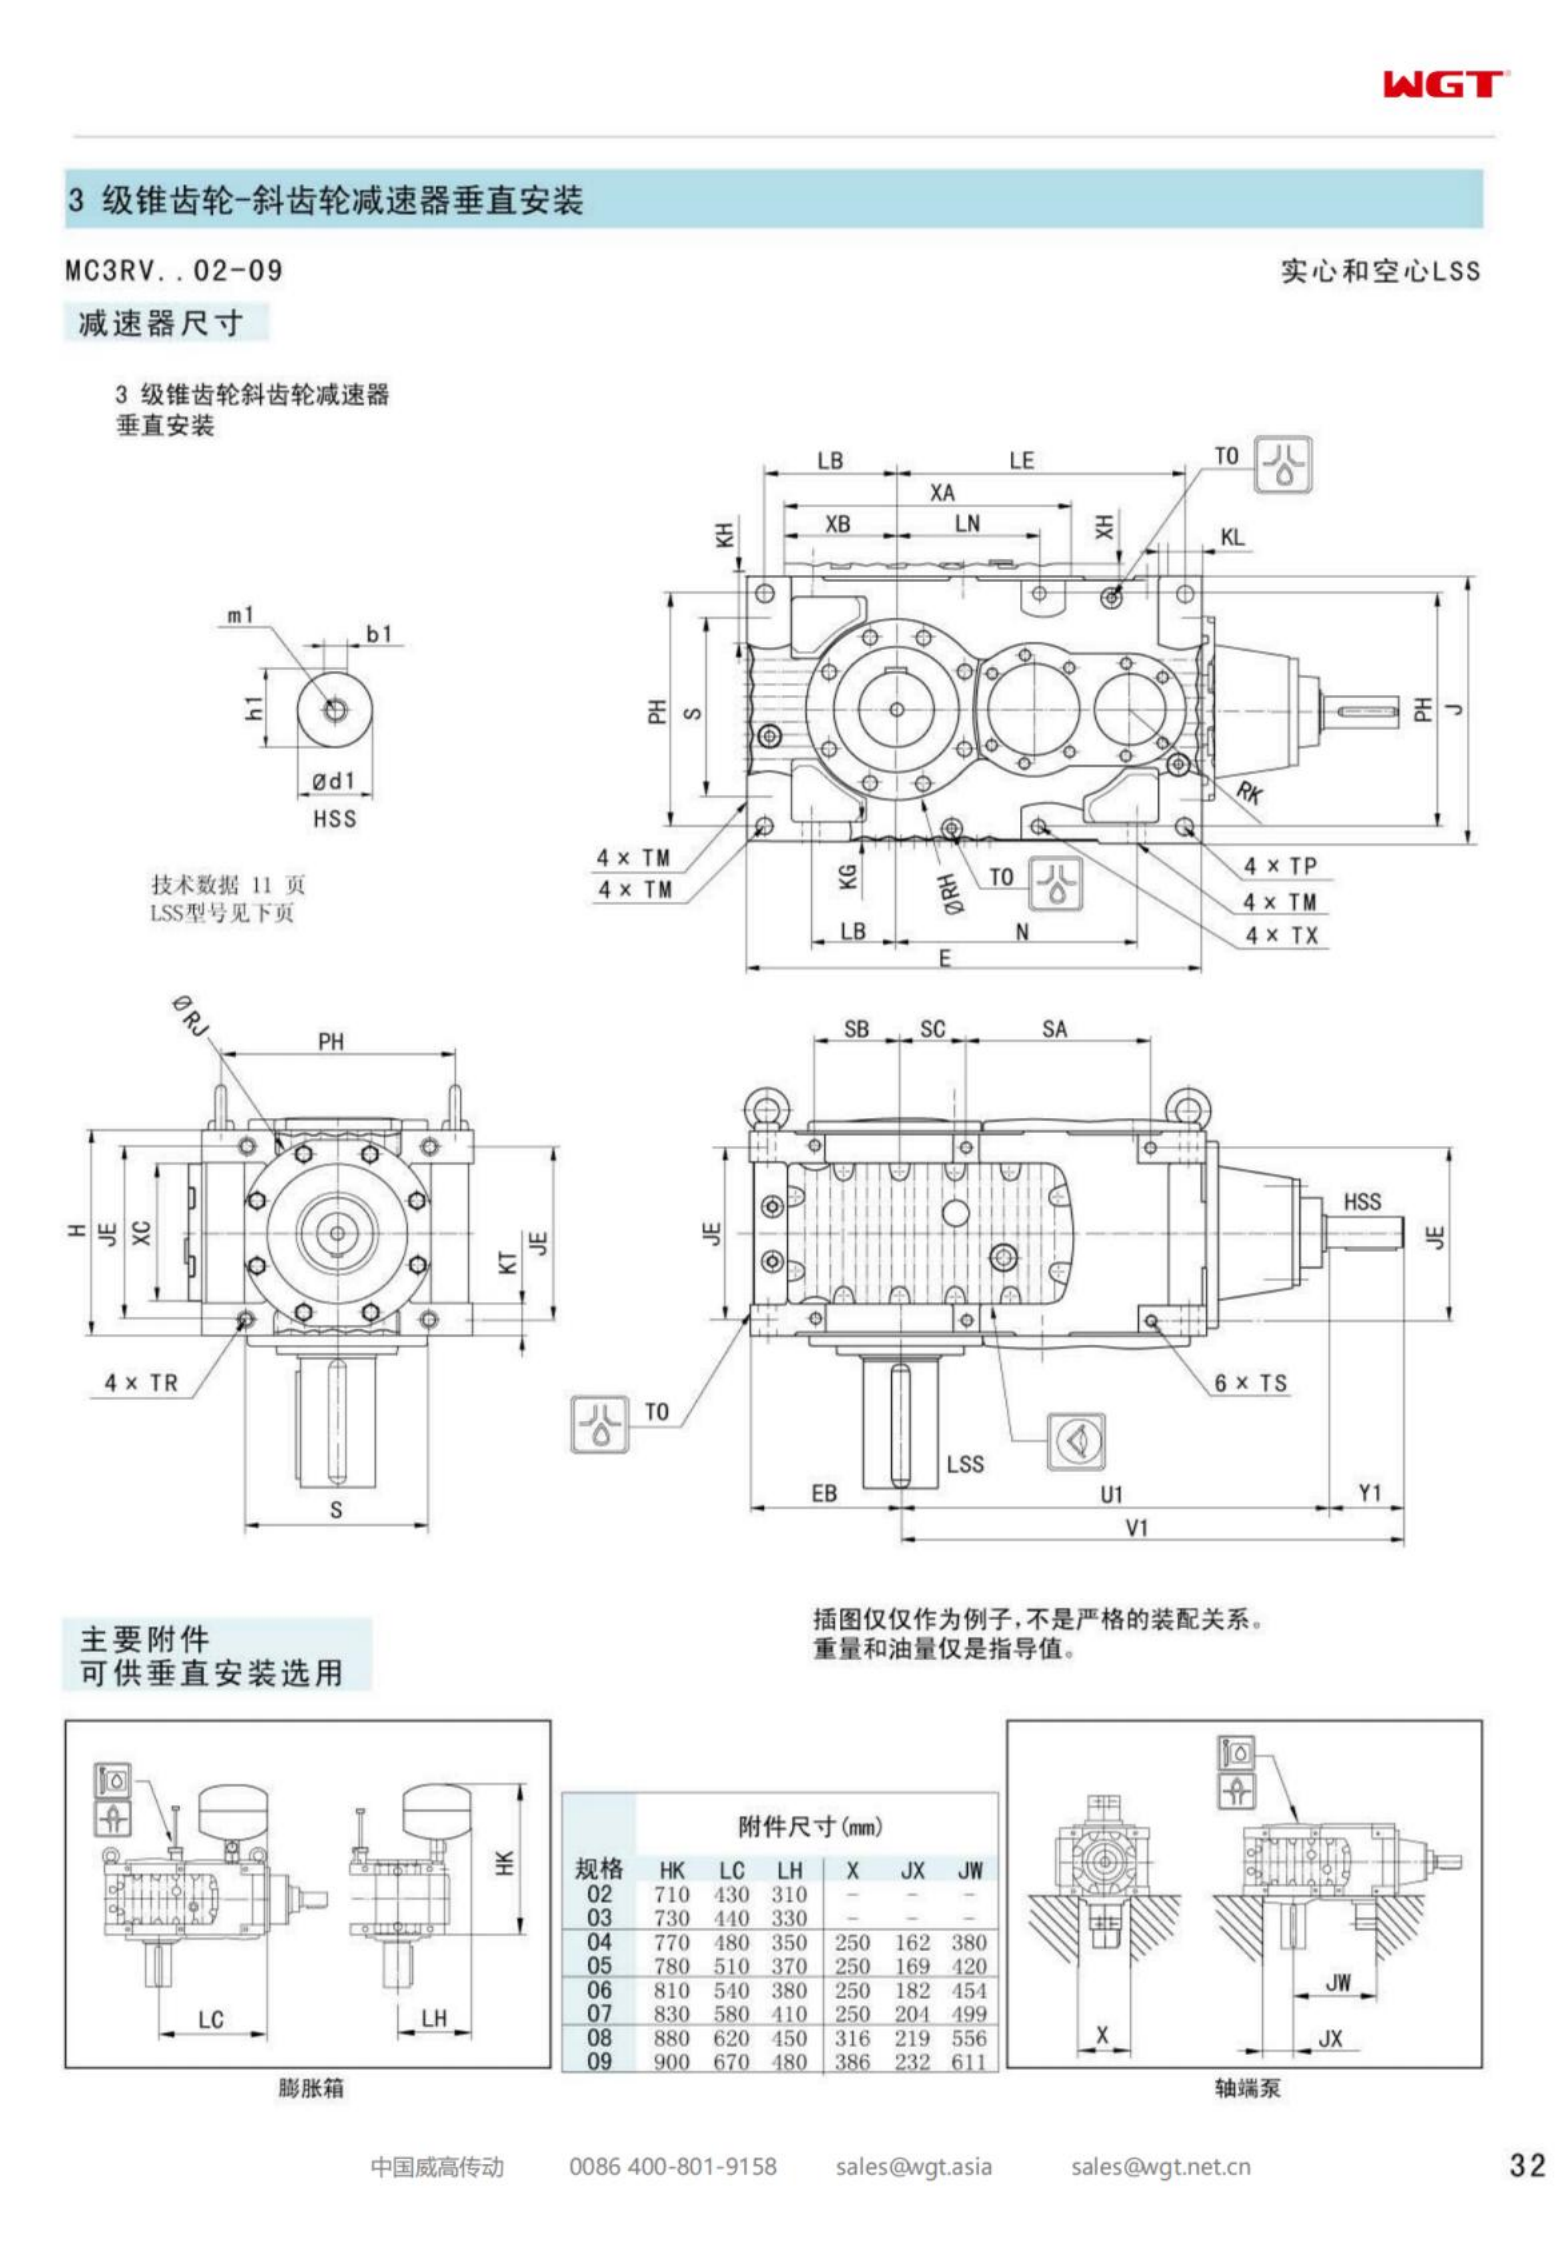 MC3RVSF05 replaces _SEW_MC_Series gearbox (patent)